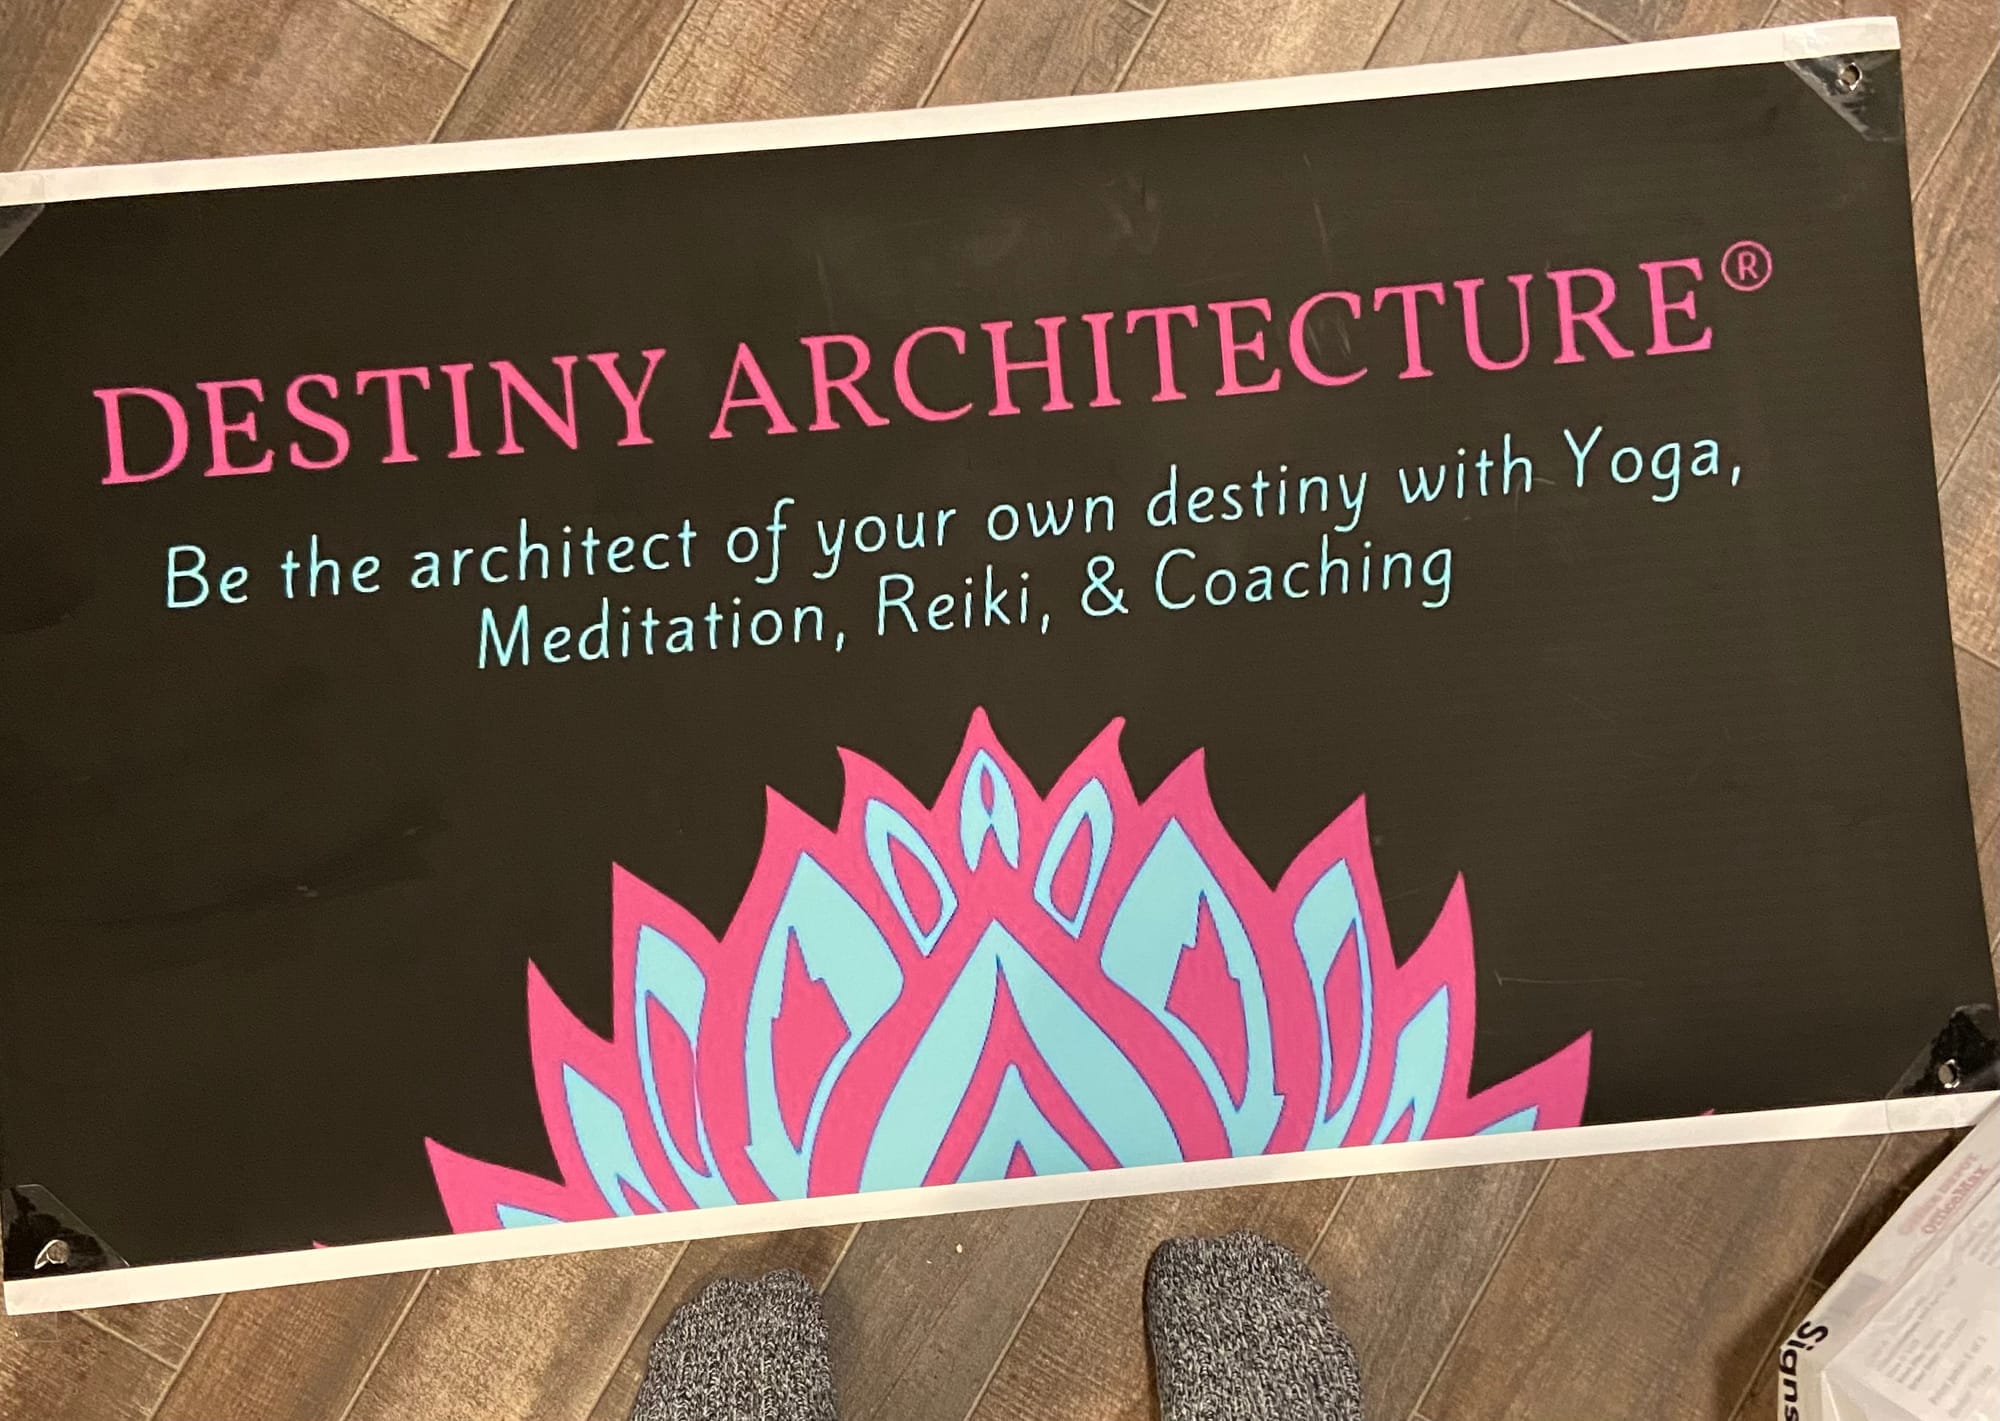 Destiny Architecture Expands: Phoenix Move, ASU Market Appearance, and Online Meditation Course